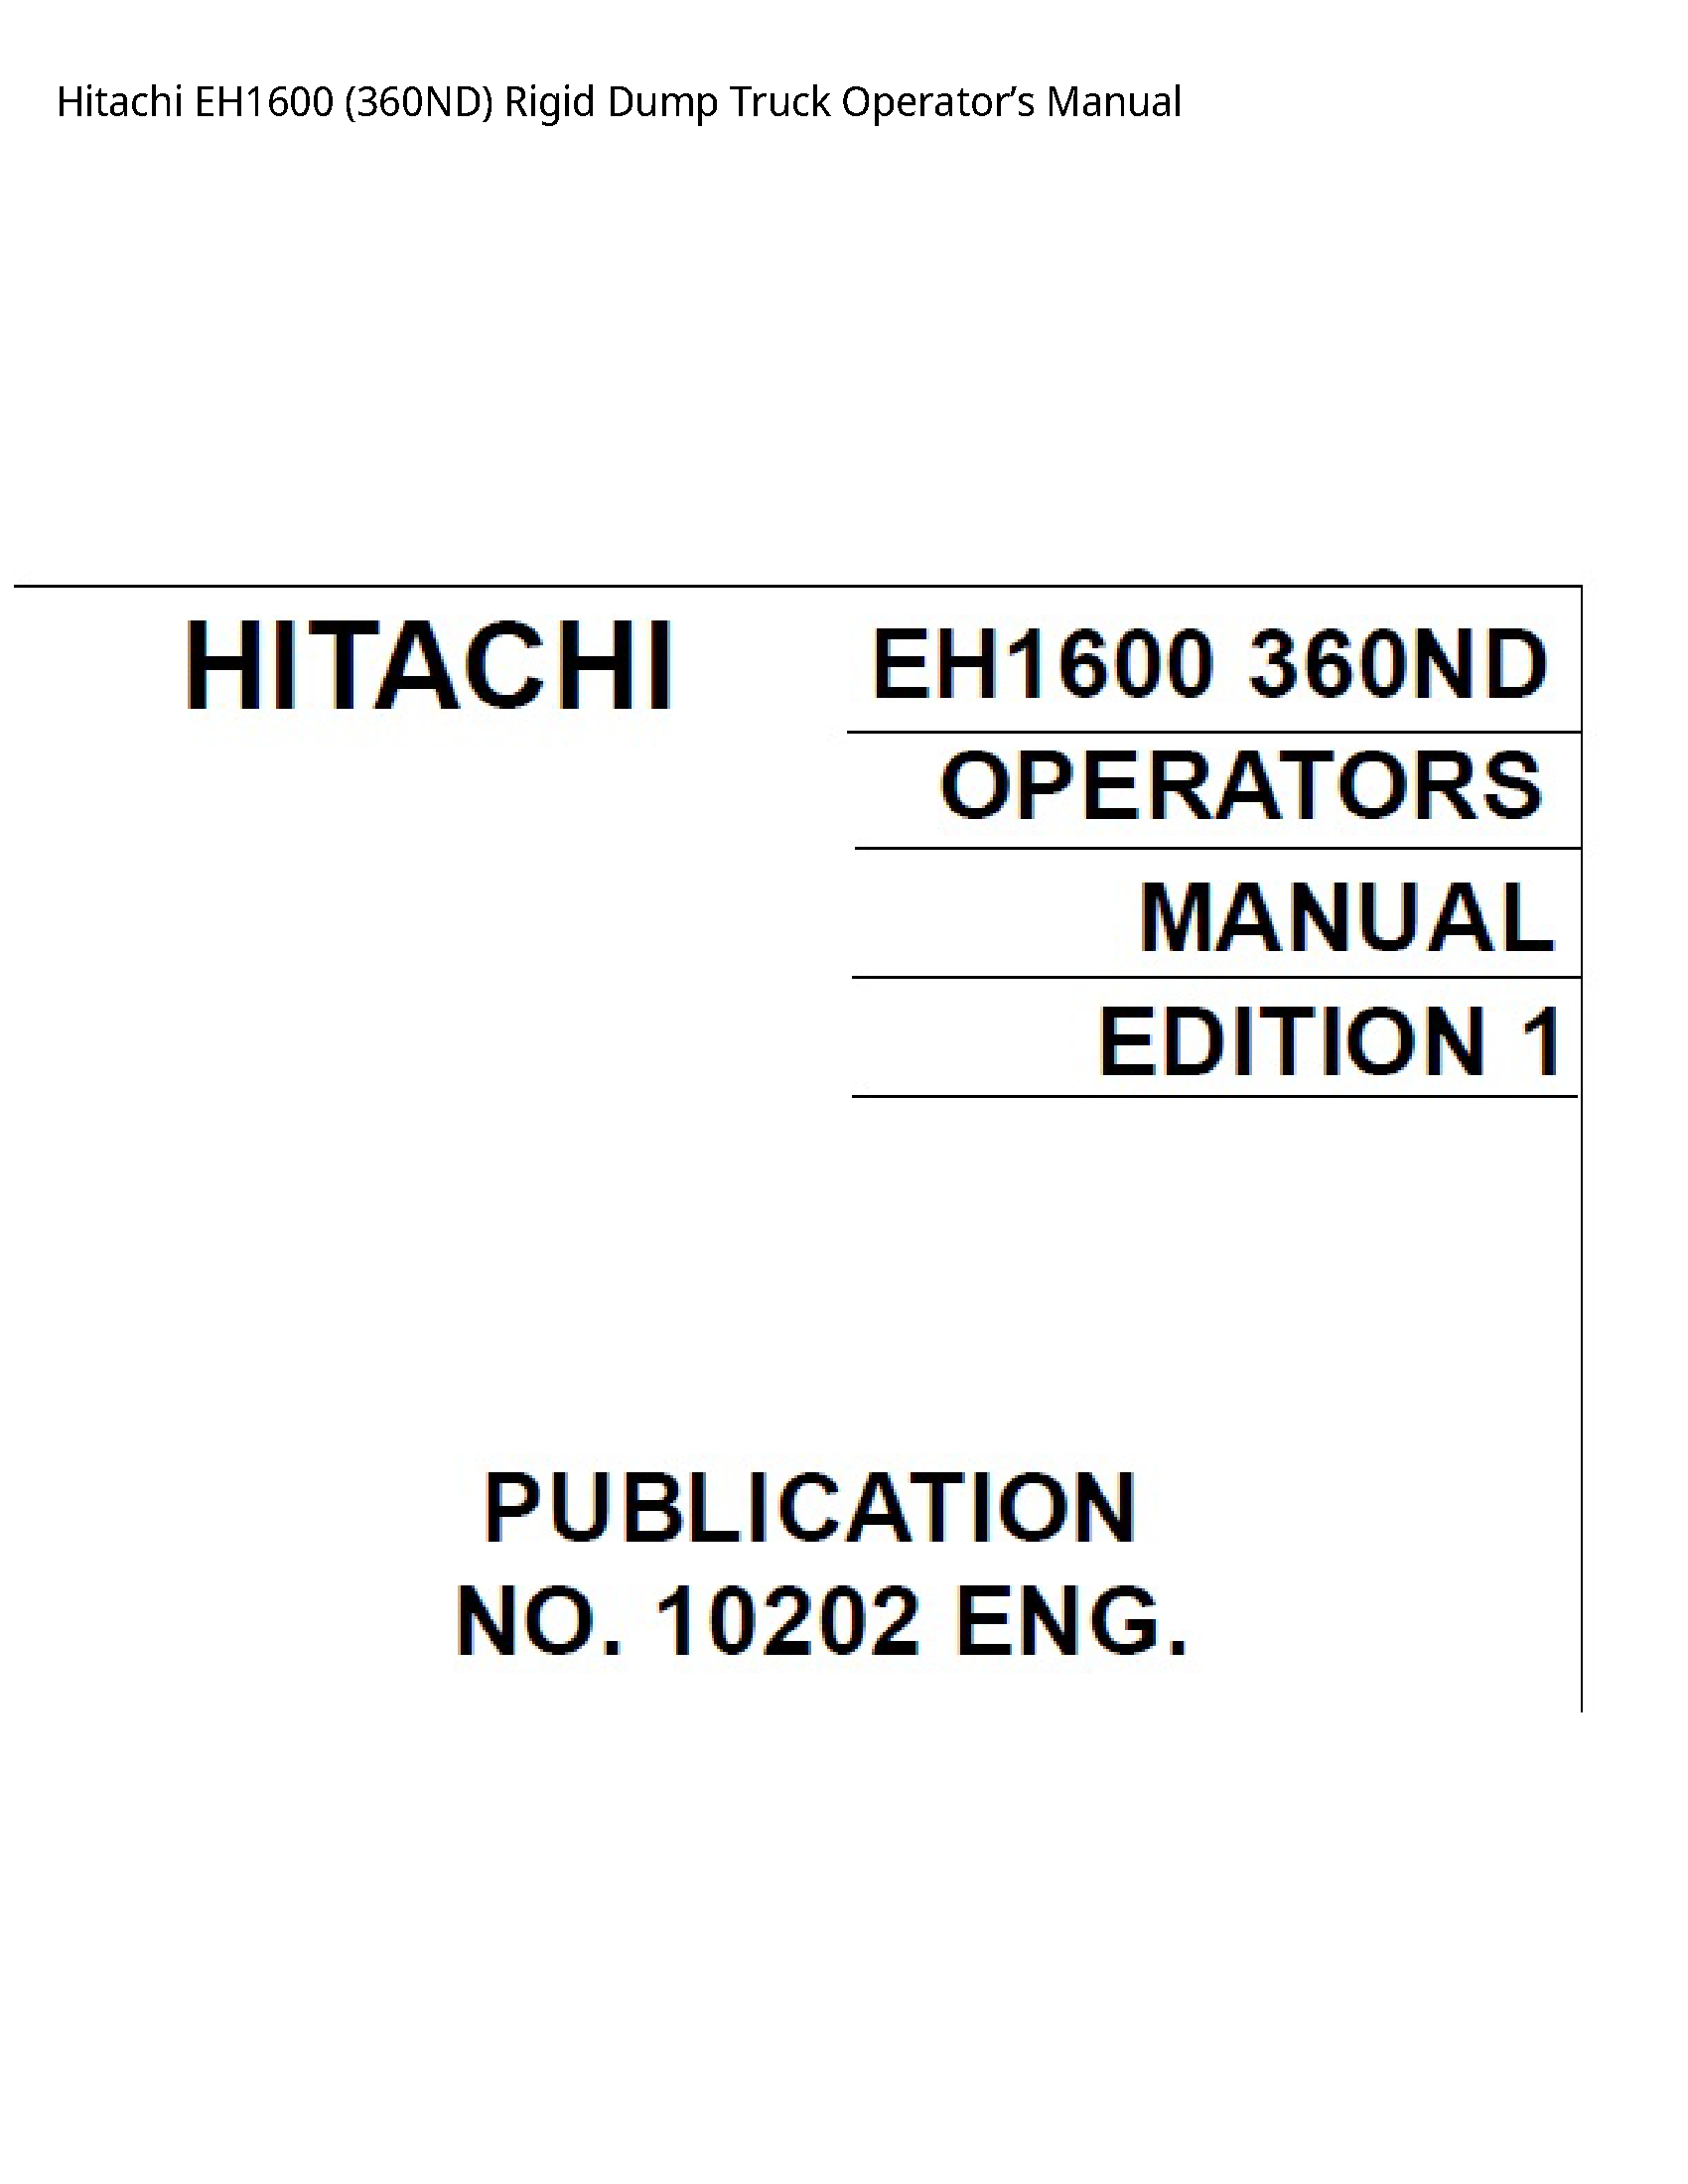 Hitachi EH1600 Rigid Dump Truck Operator’s manual